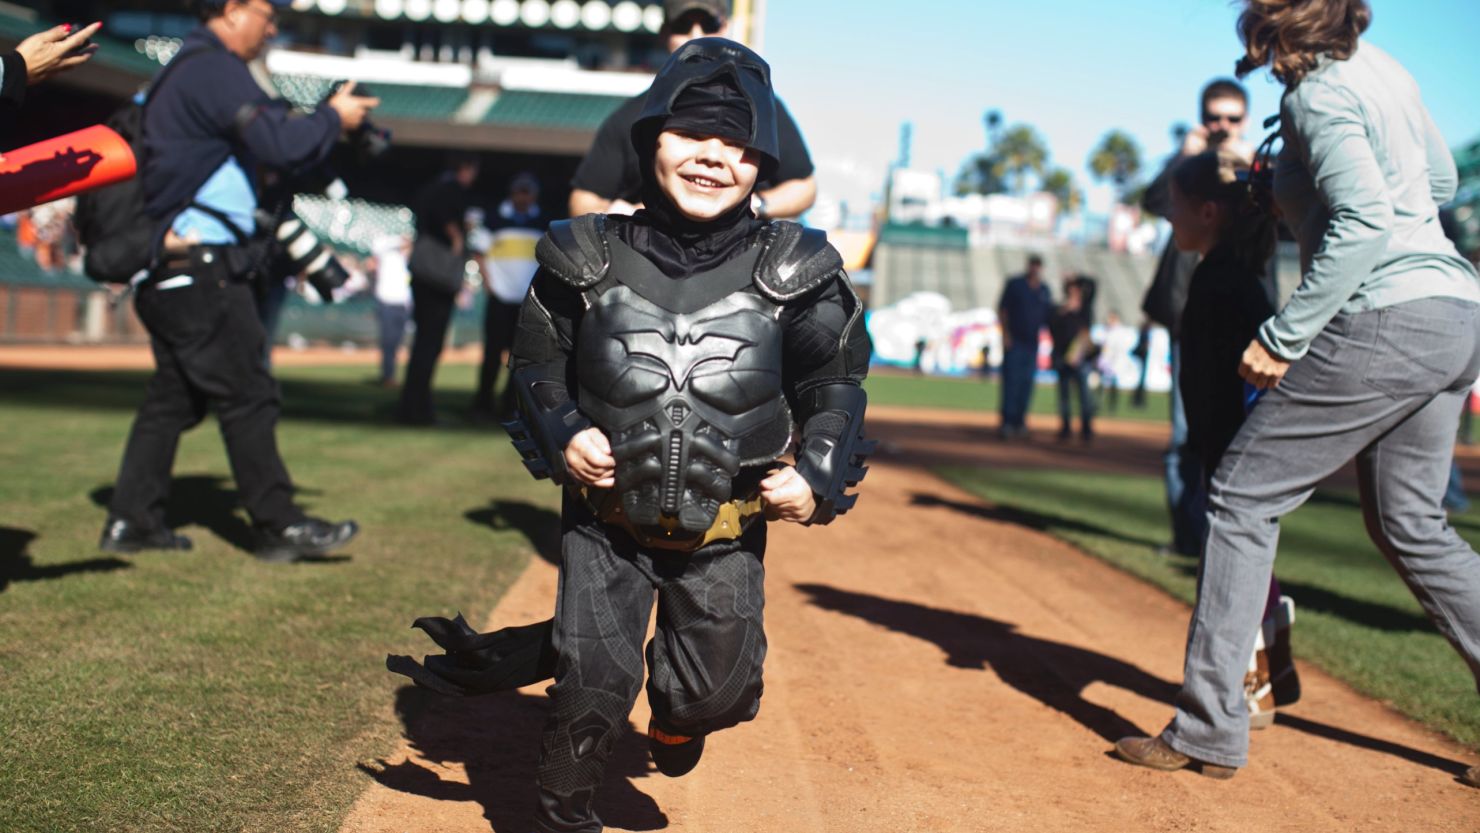 Leukemia survivor Miles Scott dressed as BatKid, runs the bases at AT&T Park in San Francisco on November 15, 2013.